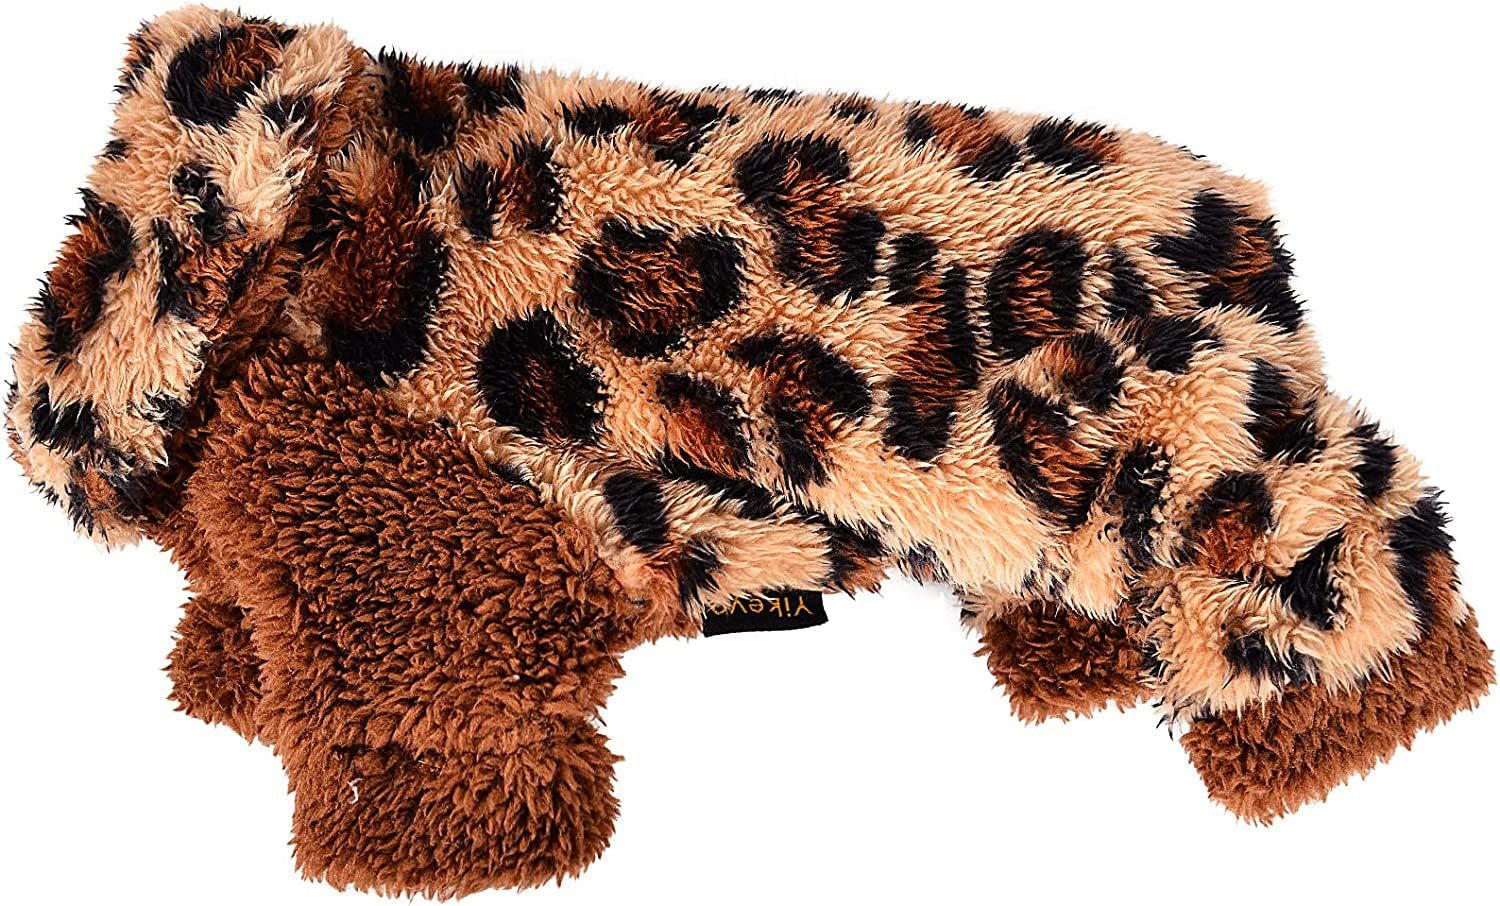 Dog's leggings, Brown leopard